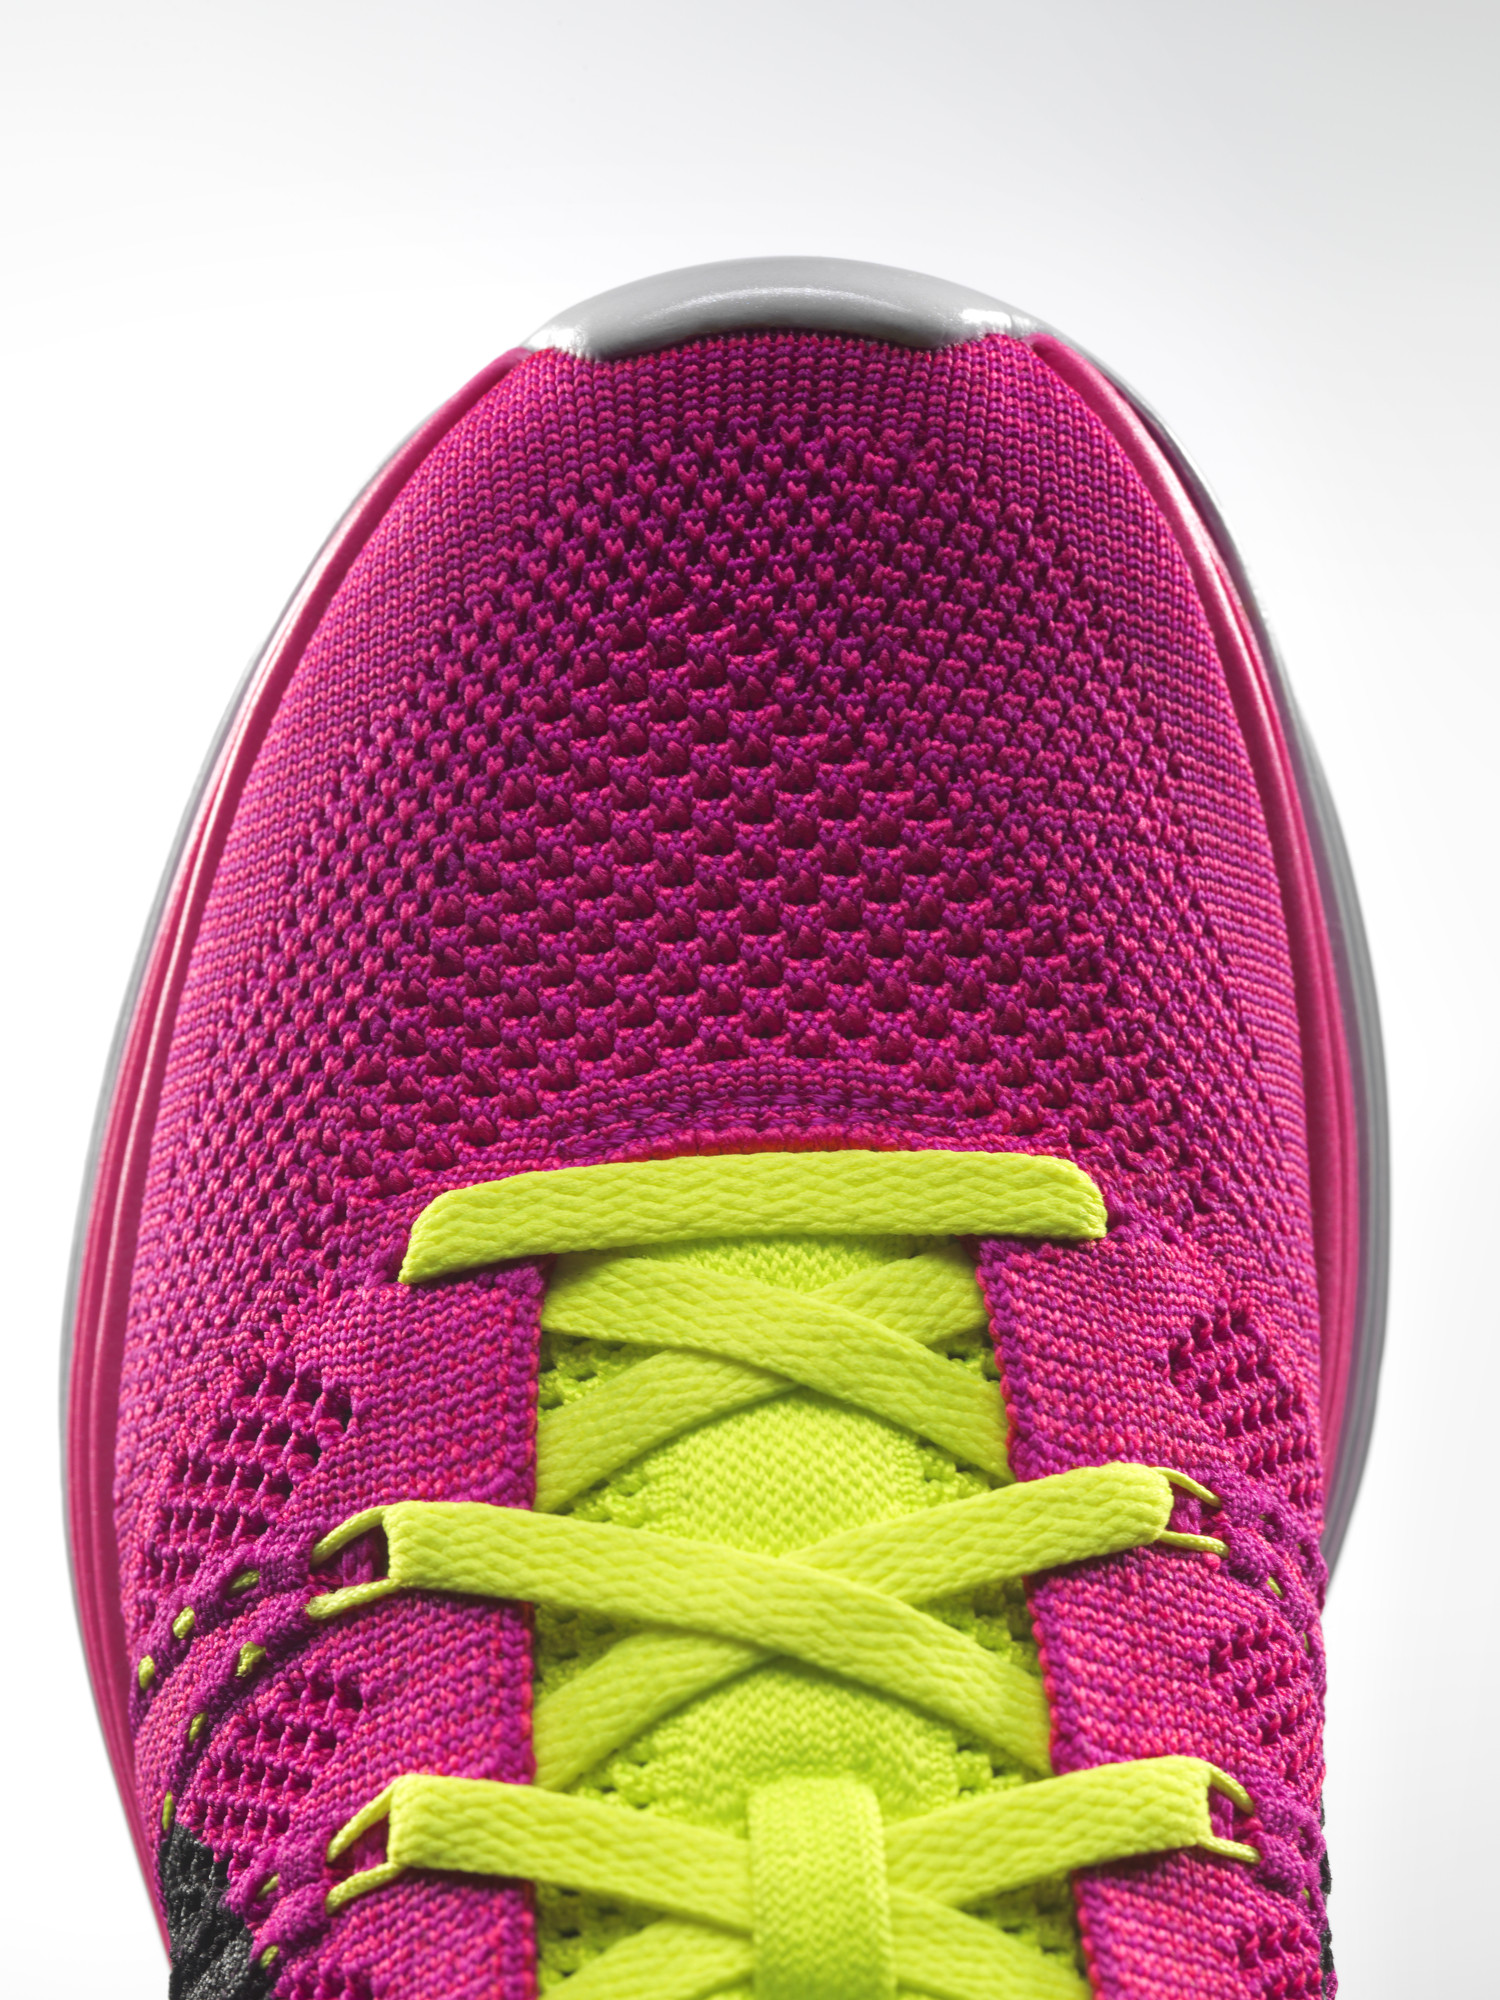 Nike Flyknit: Ready, Steady, Go!